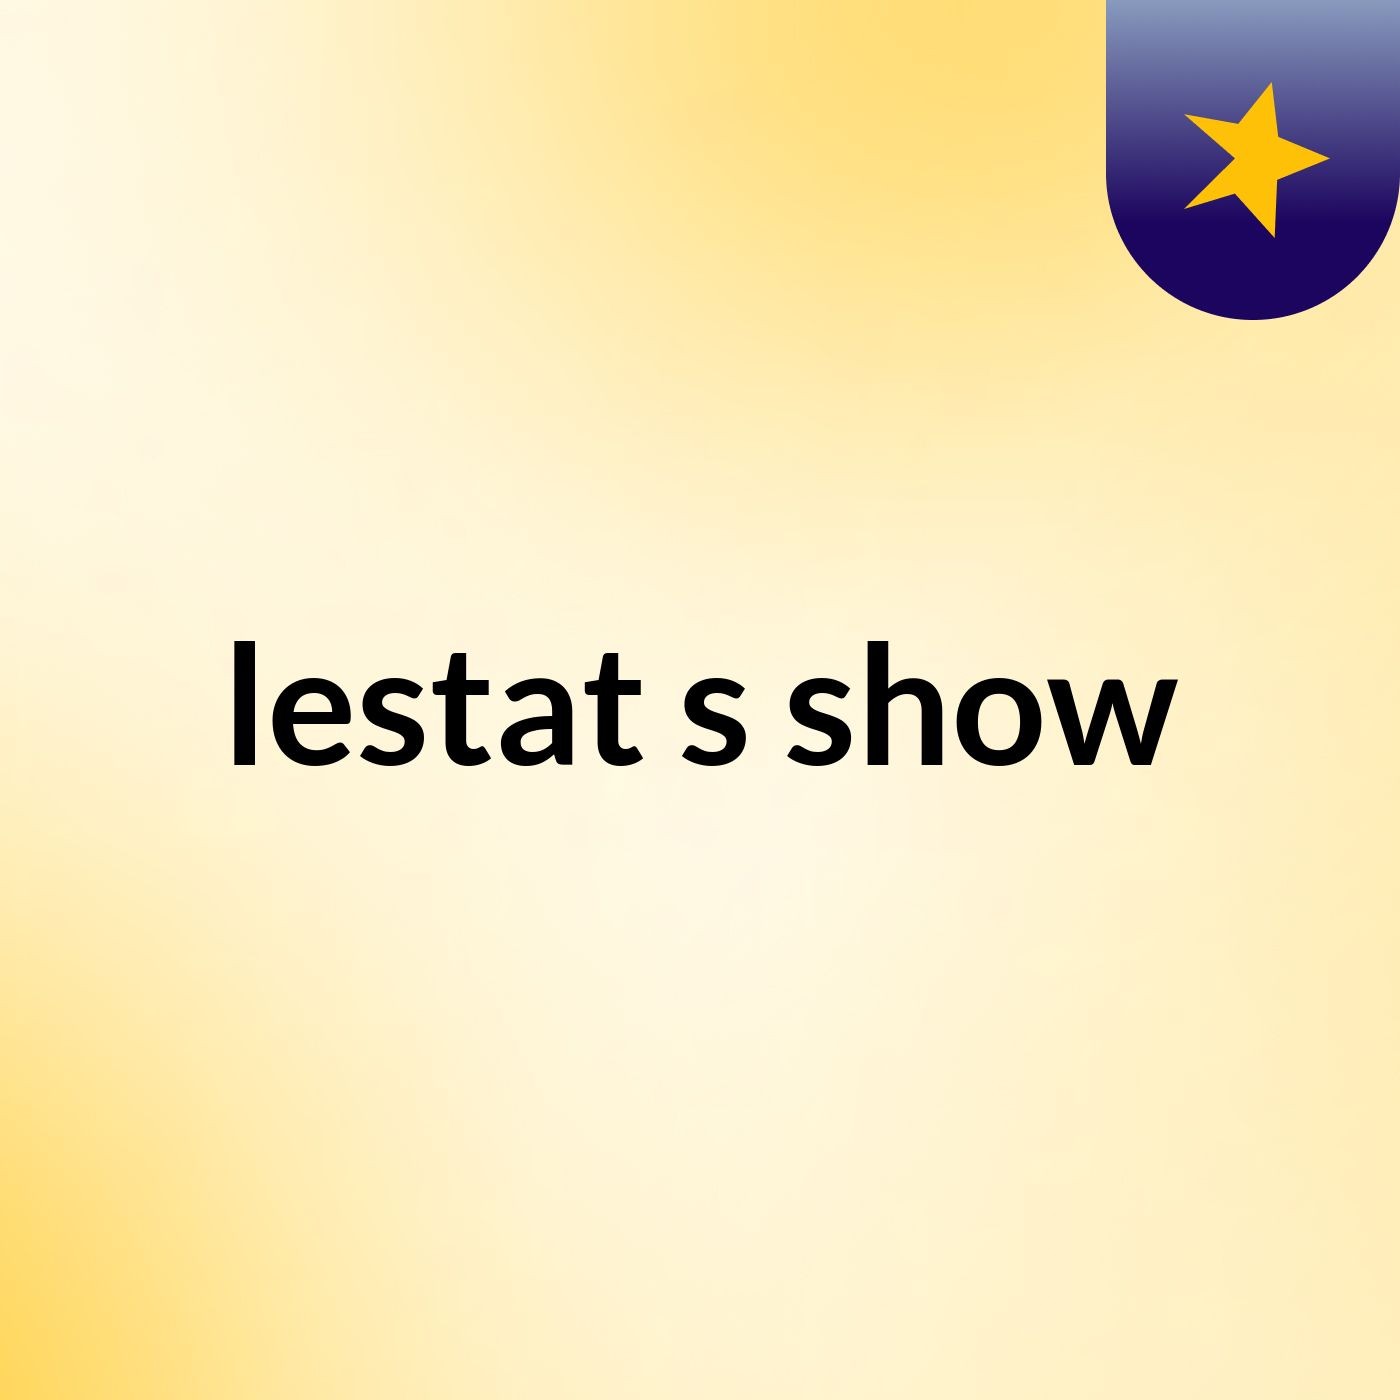 lestat's show